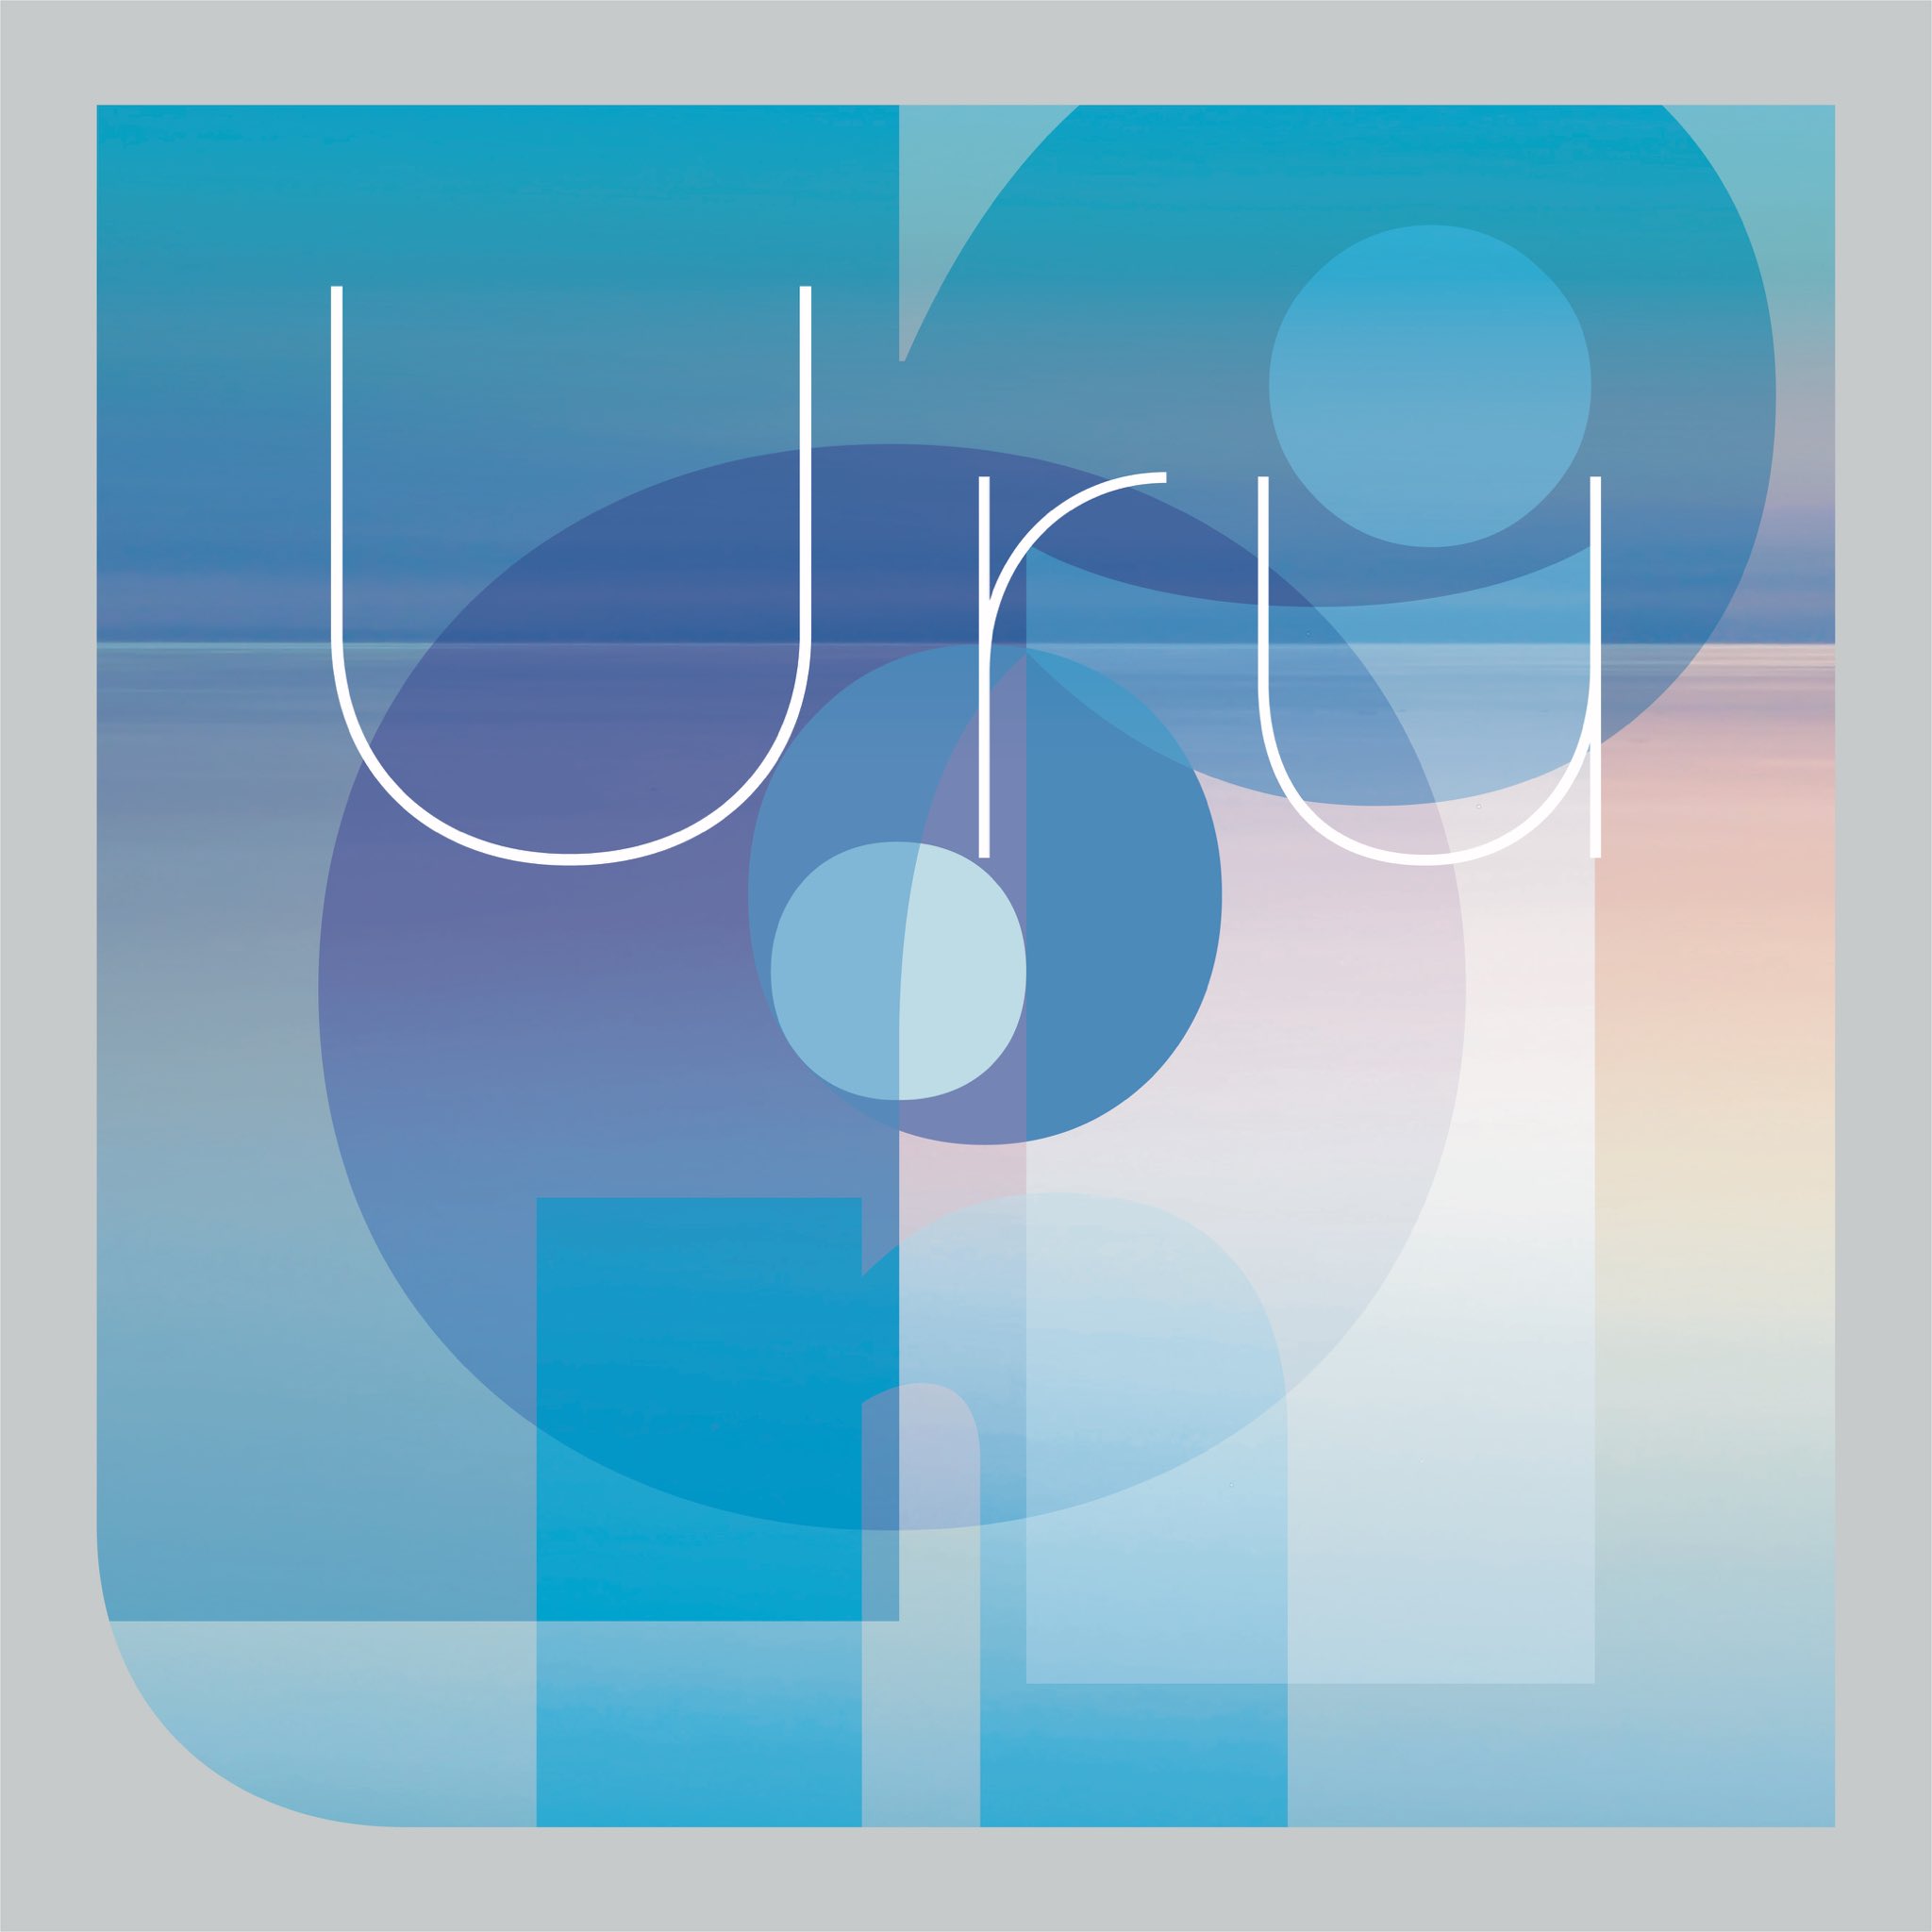 Uru در توییتر Uru Staff 3 18 Release Uru 2nd Album オリオンブルー 初回生産限定 カバー盤 収録曲 全8曲 1 3月9日 2 カムフラージュ 3 白日 4 このまま君だけを奪い去りたい 5 Funnybunny 6 Pretender 7 若者のすべて 8 雪の華 詳細